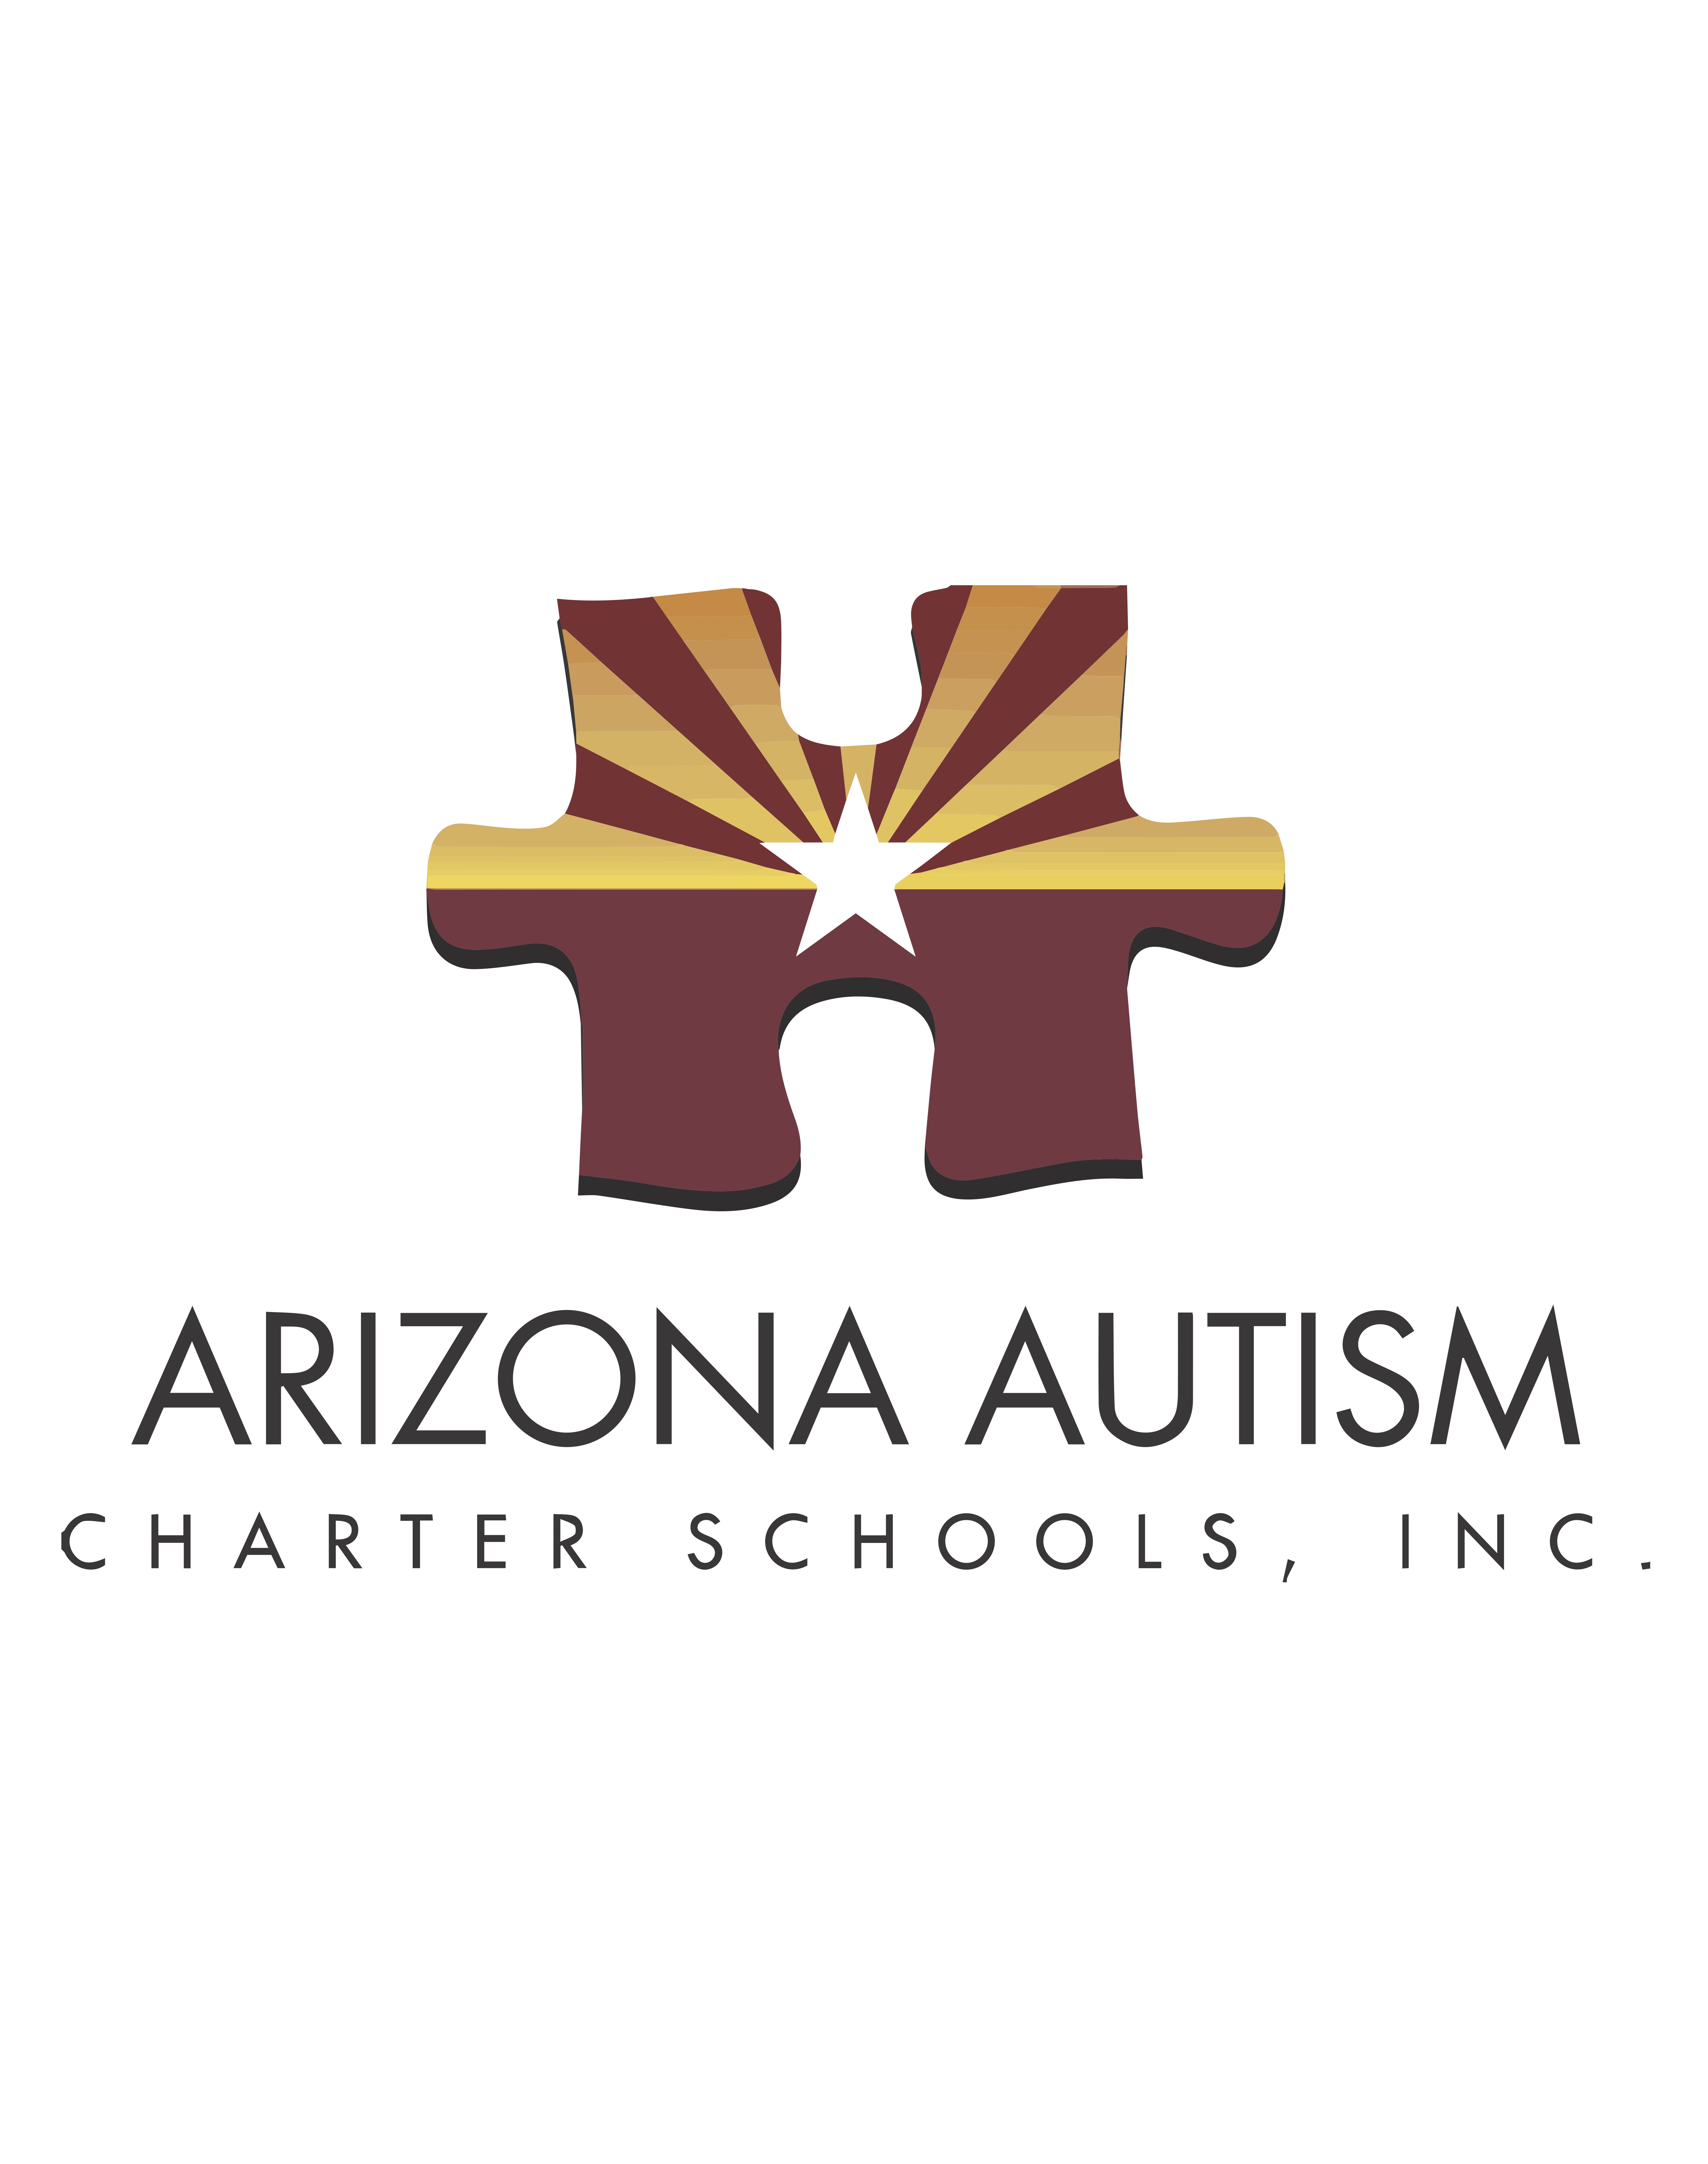 Autism Charter